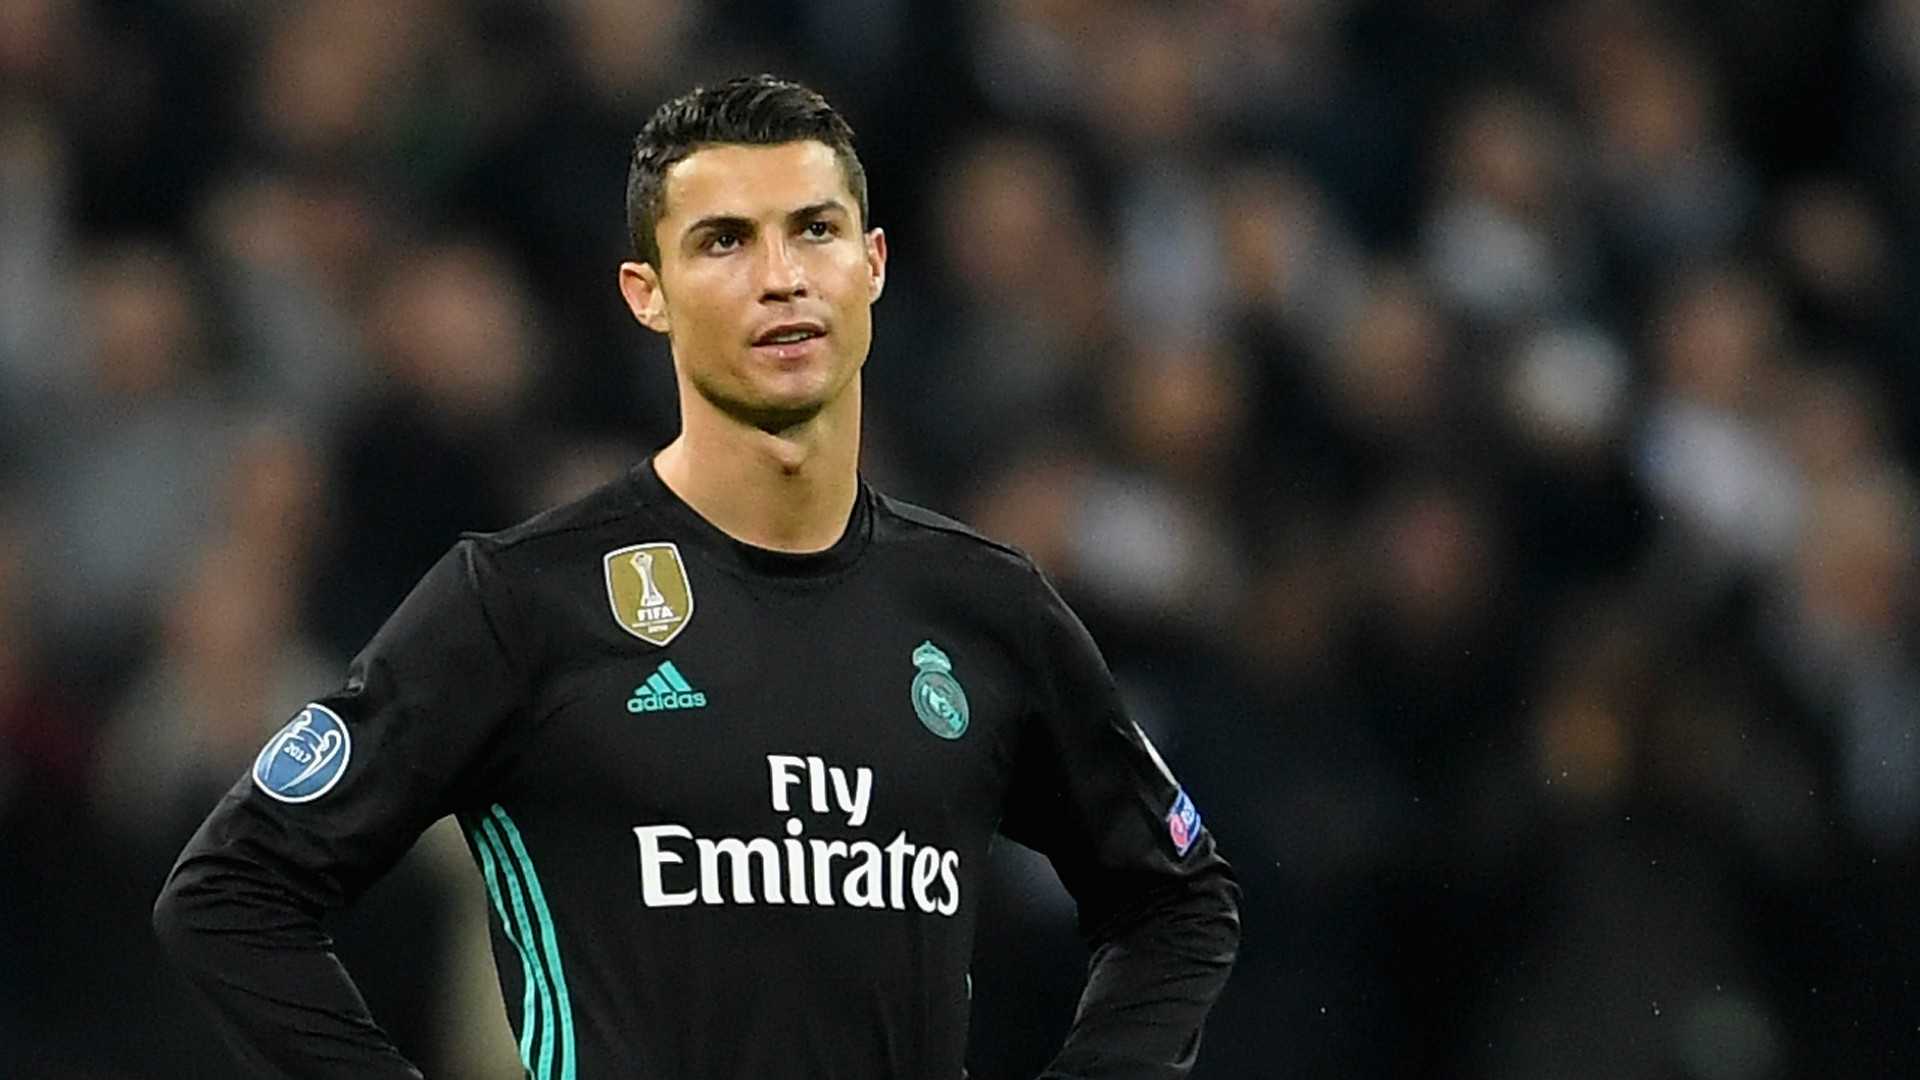 Hd Wallpaper 2018 Cristiano Ronaldo Pics Top Best Photo Edigital